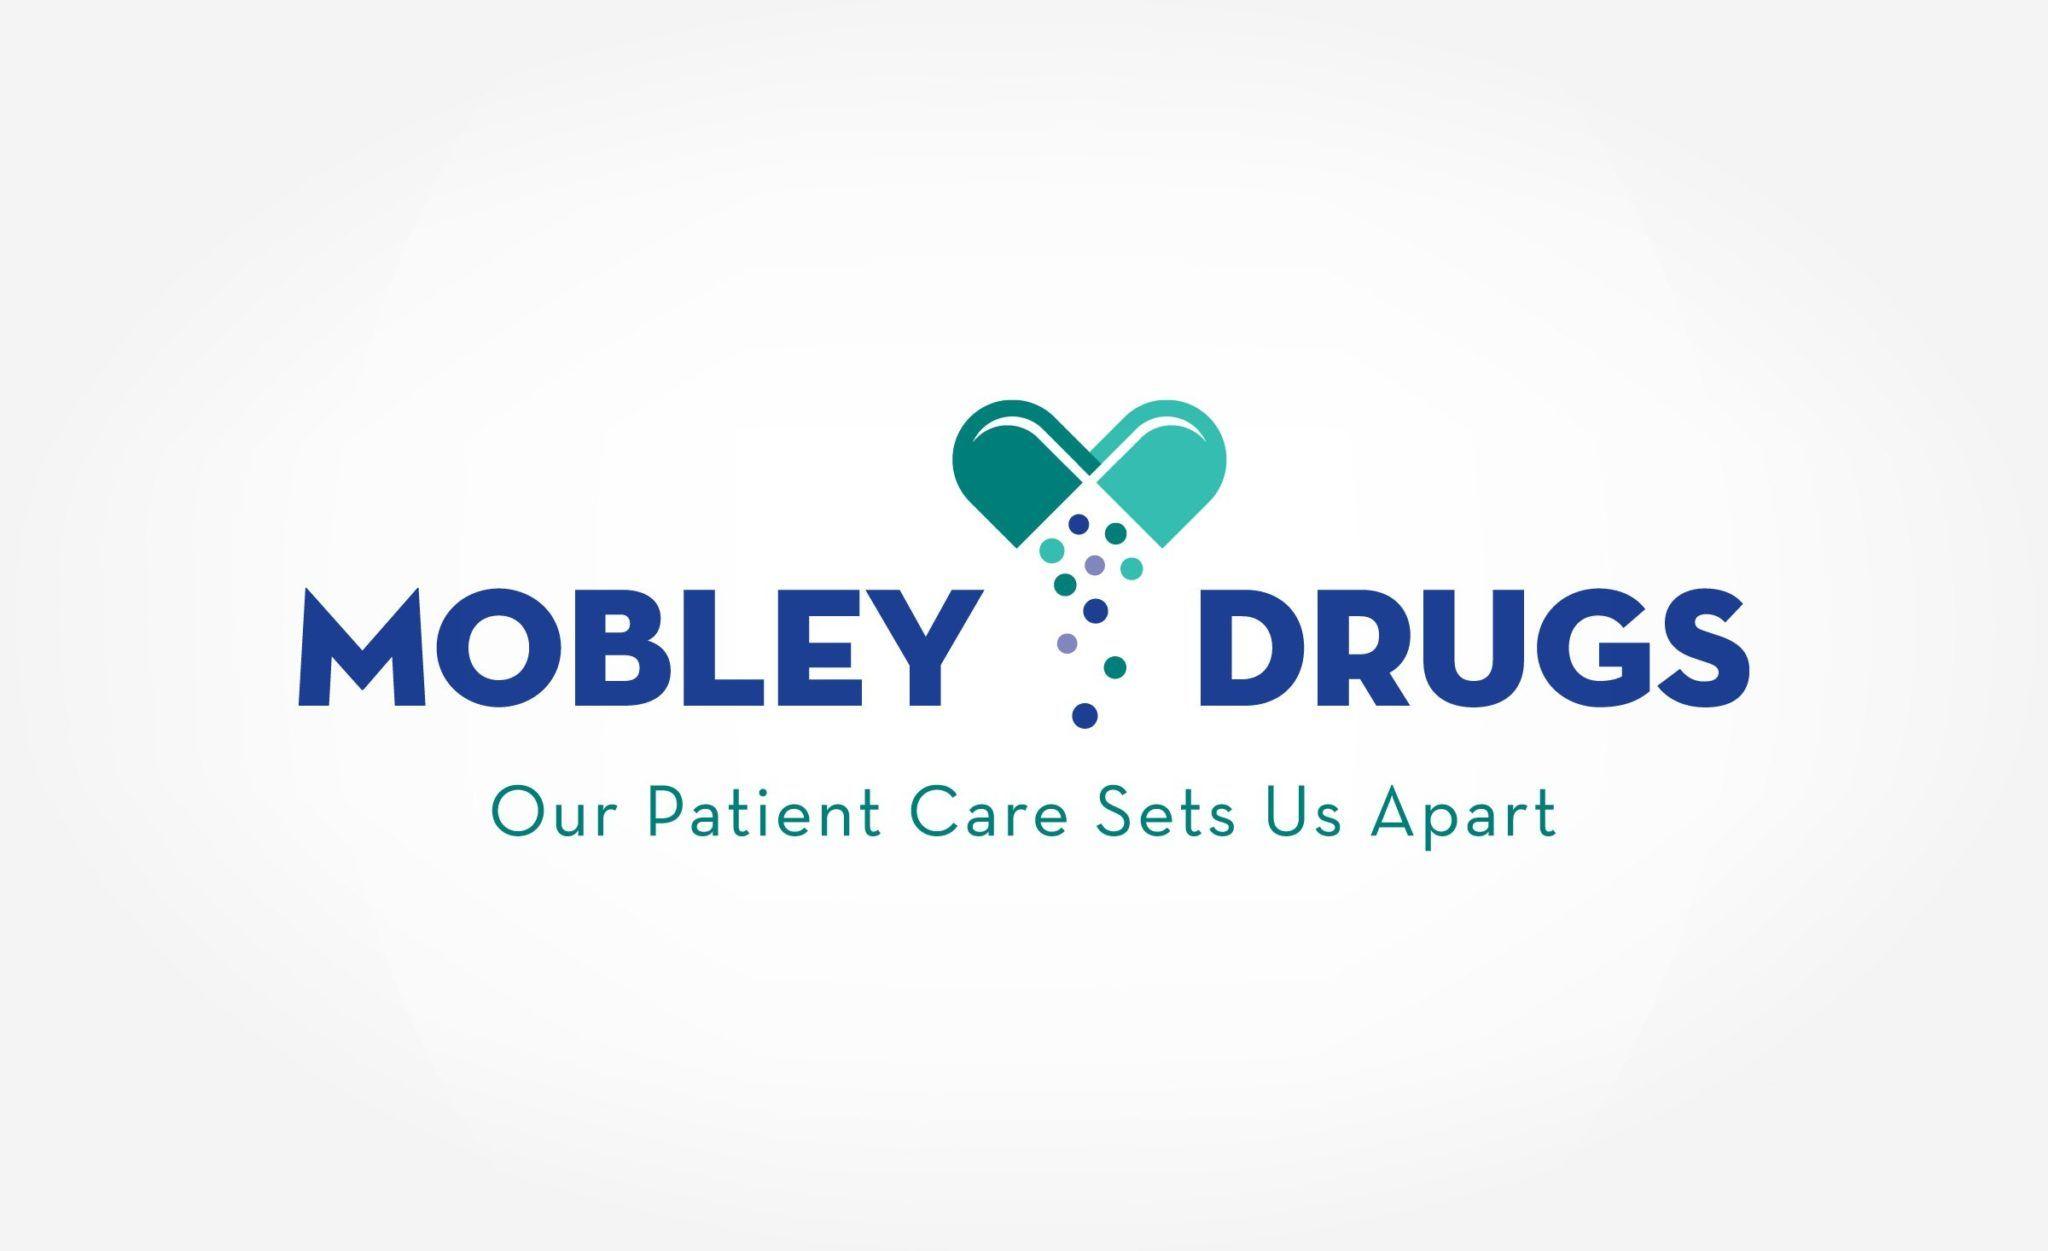 Mobley Logo - Mobley Drugs Creative. kickcharge.com. KickCharge